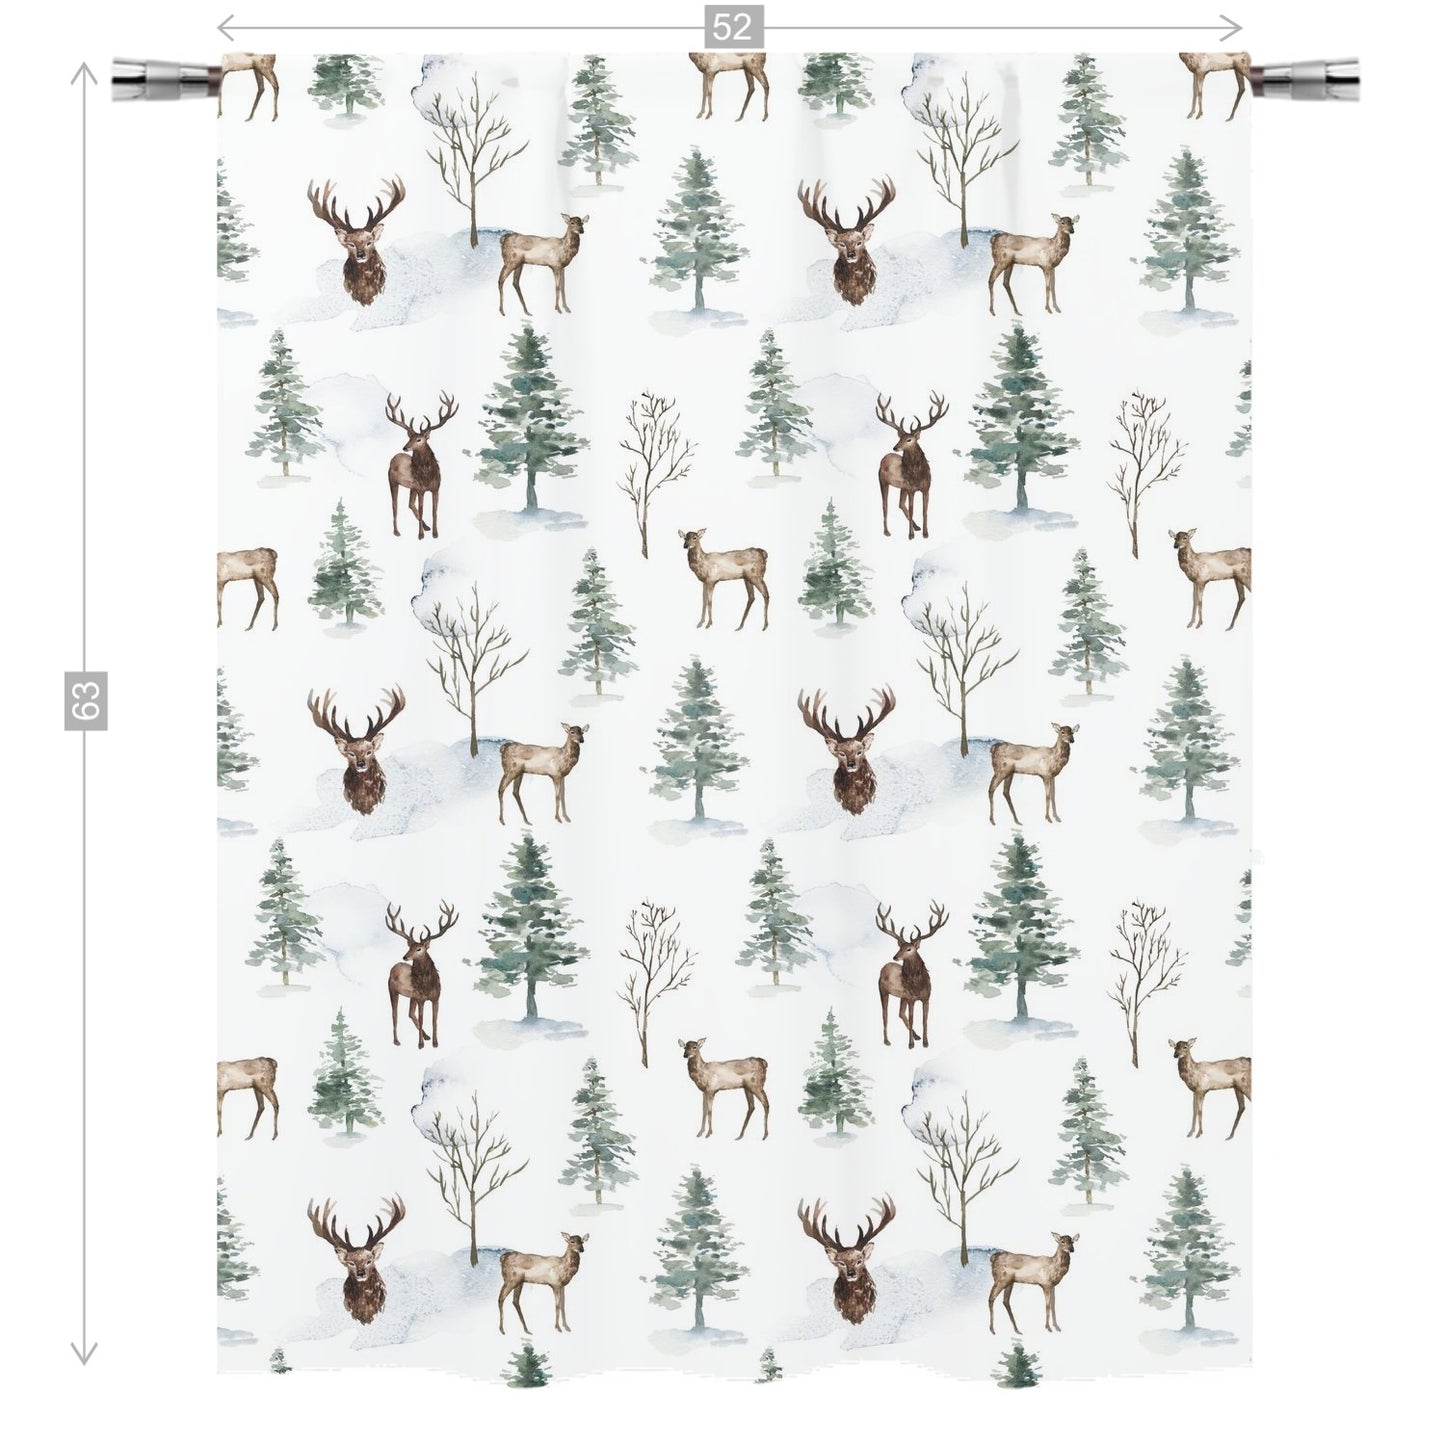 Woodland Curtain Single Panel, Forest Nursery Decor - Enchanted Forest